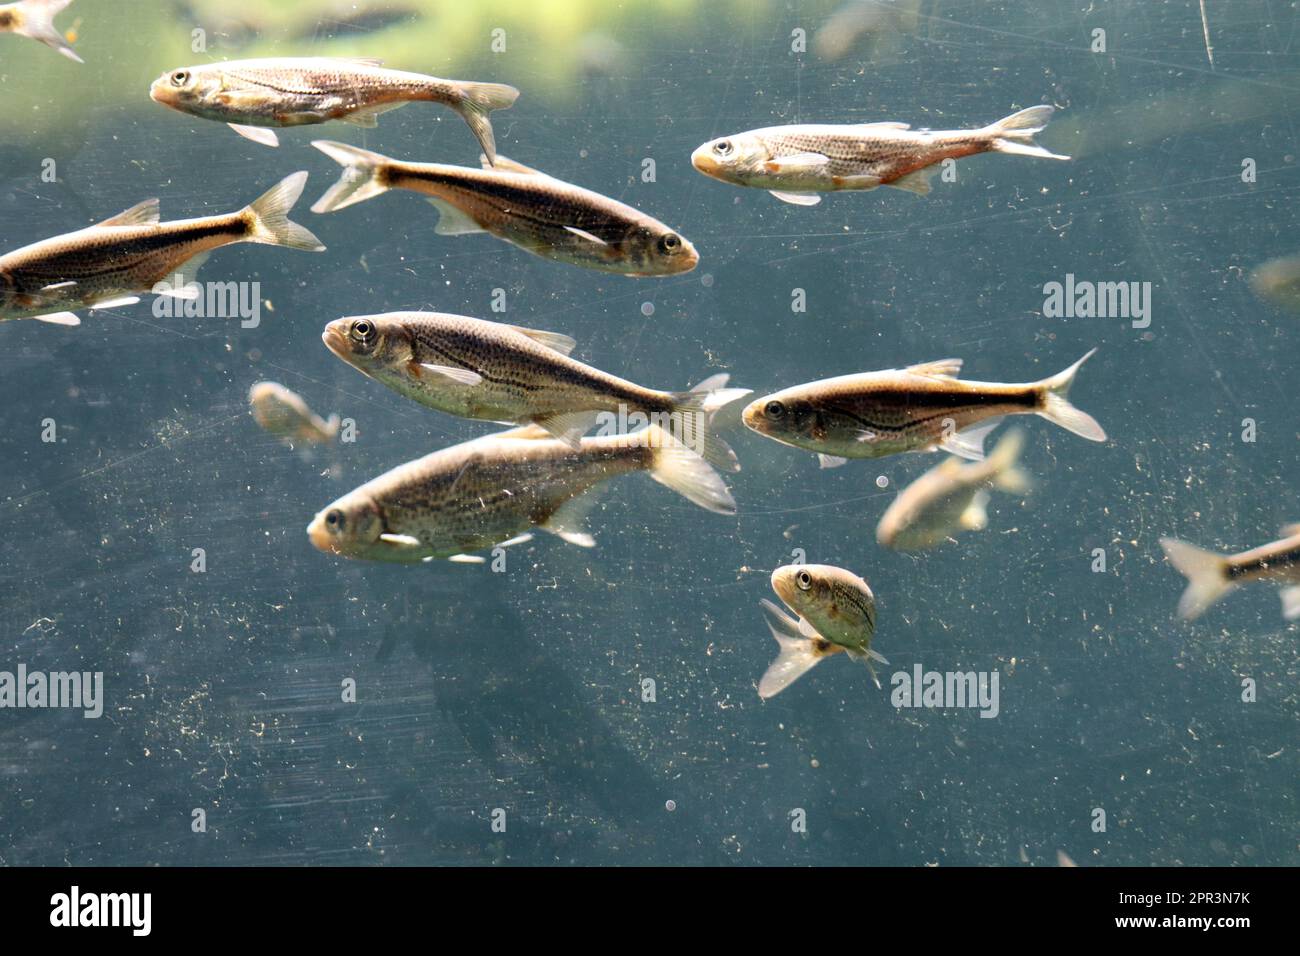 Minnows under water Stock Photo - Alamy